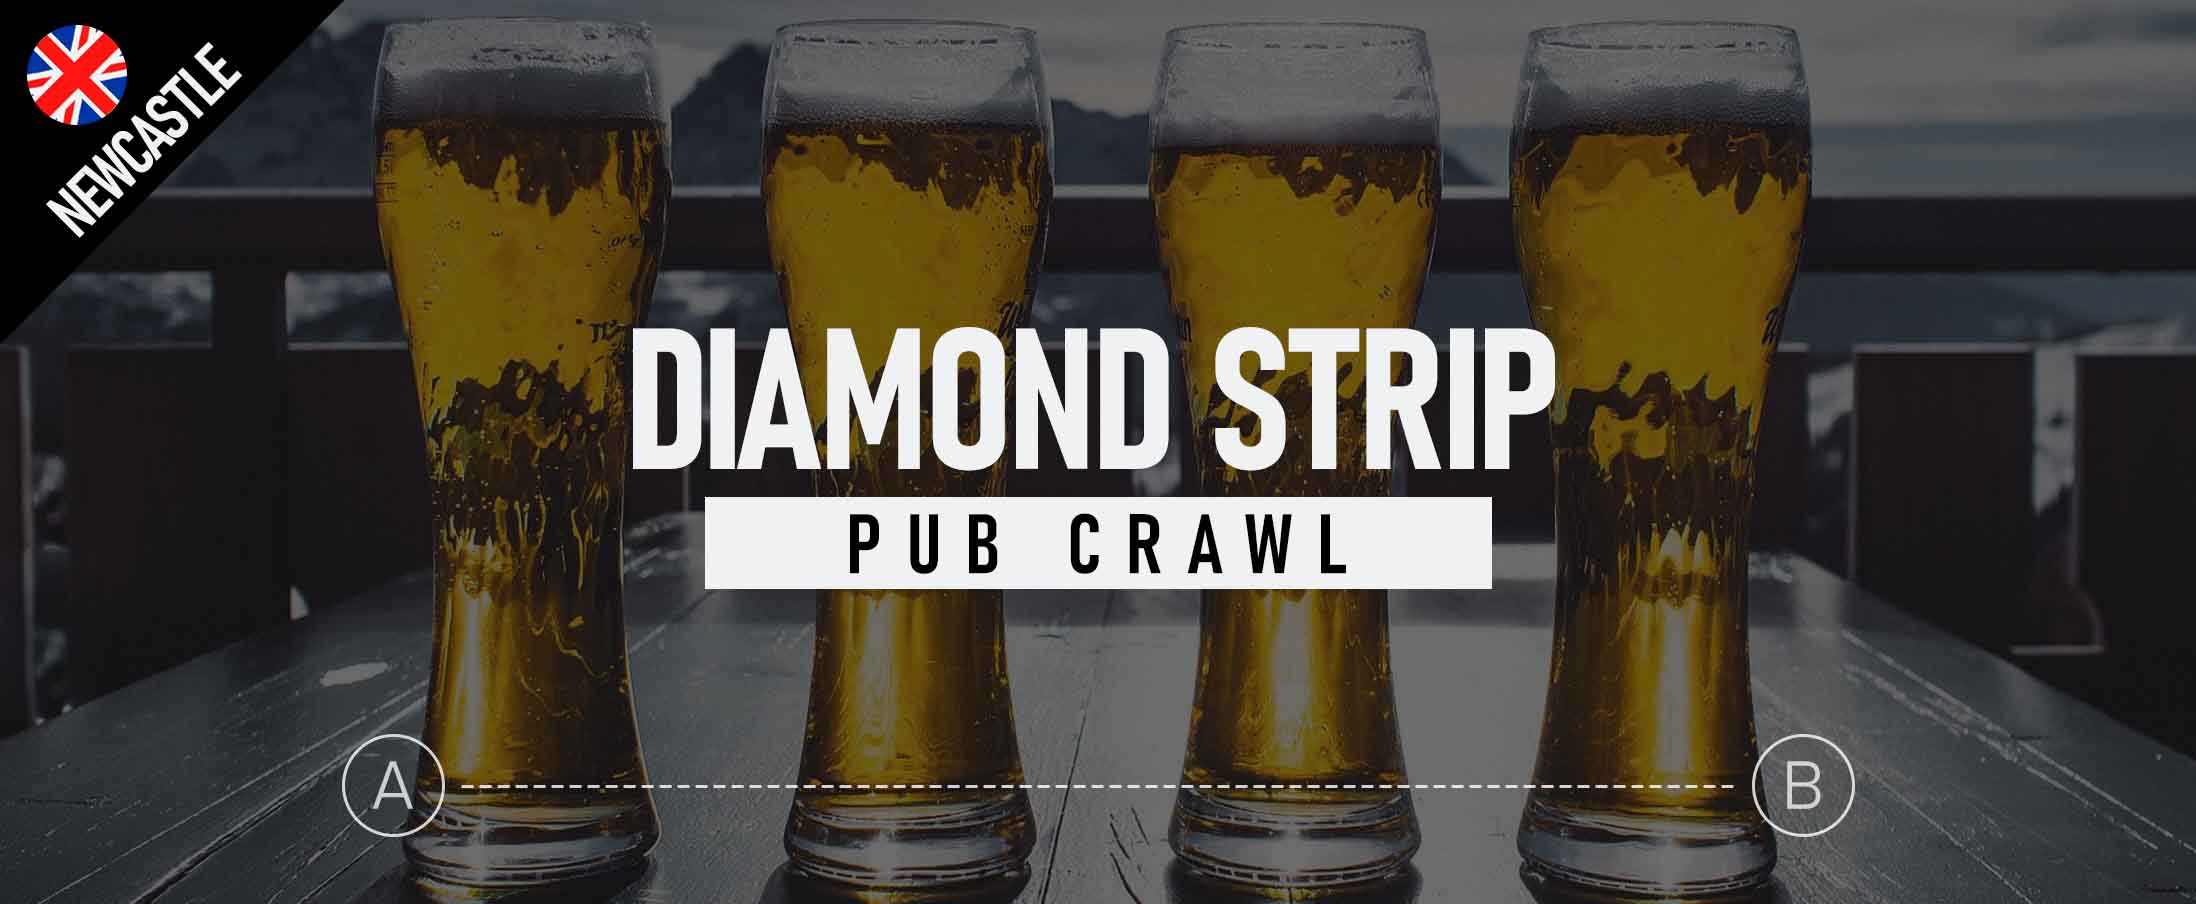 Diamond Strip Pub Crawl